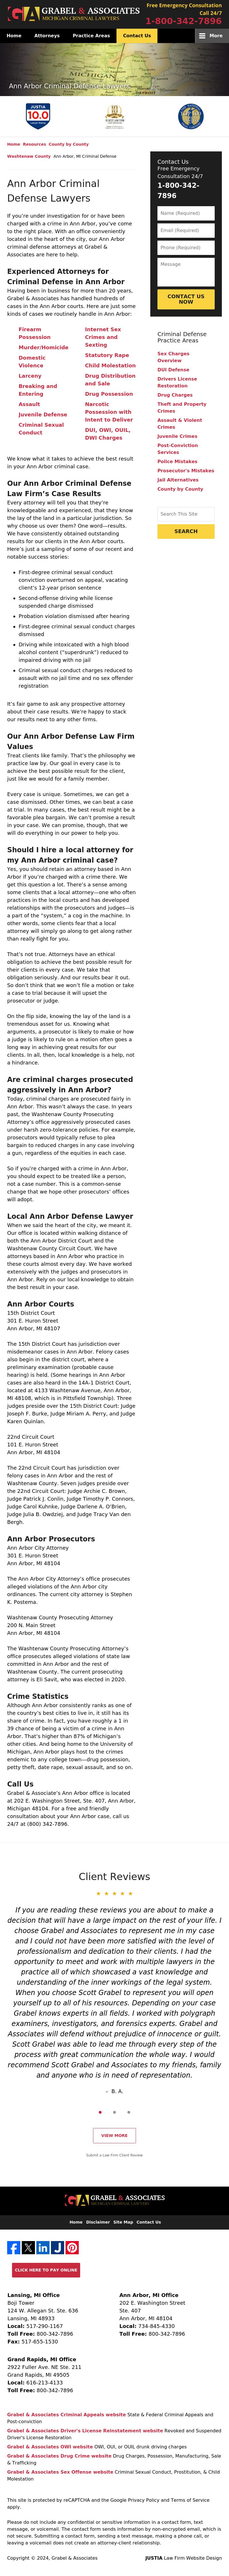 Grabel & Associates - Ann Arbor MI Lawyers